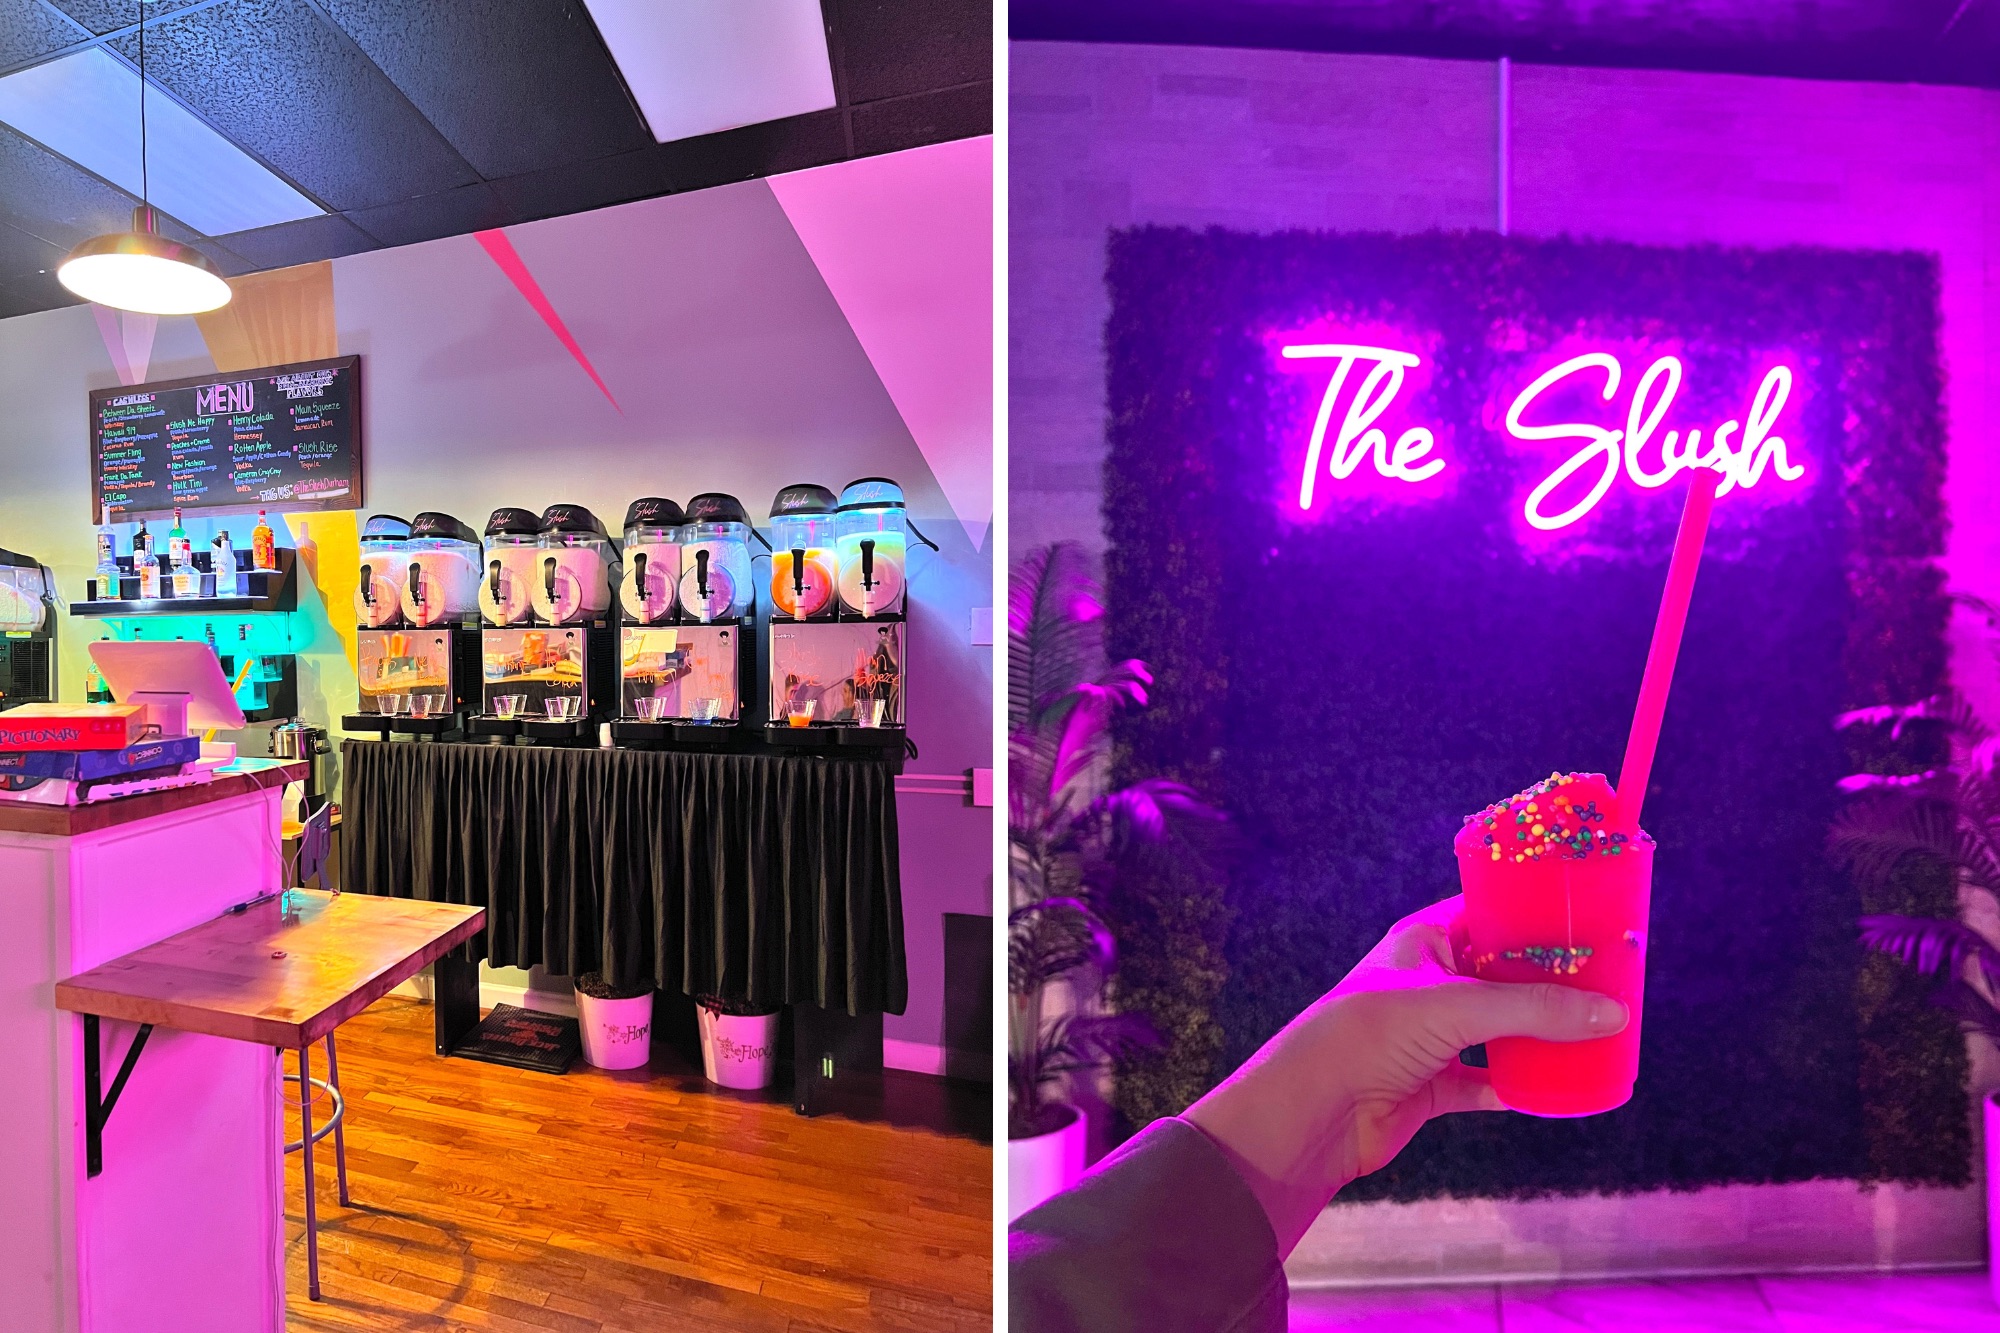 Slush machines and a bright pink drink at The Slush